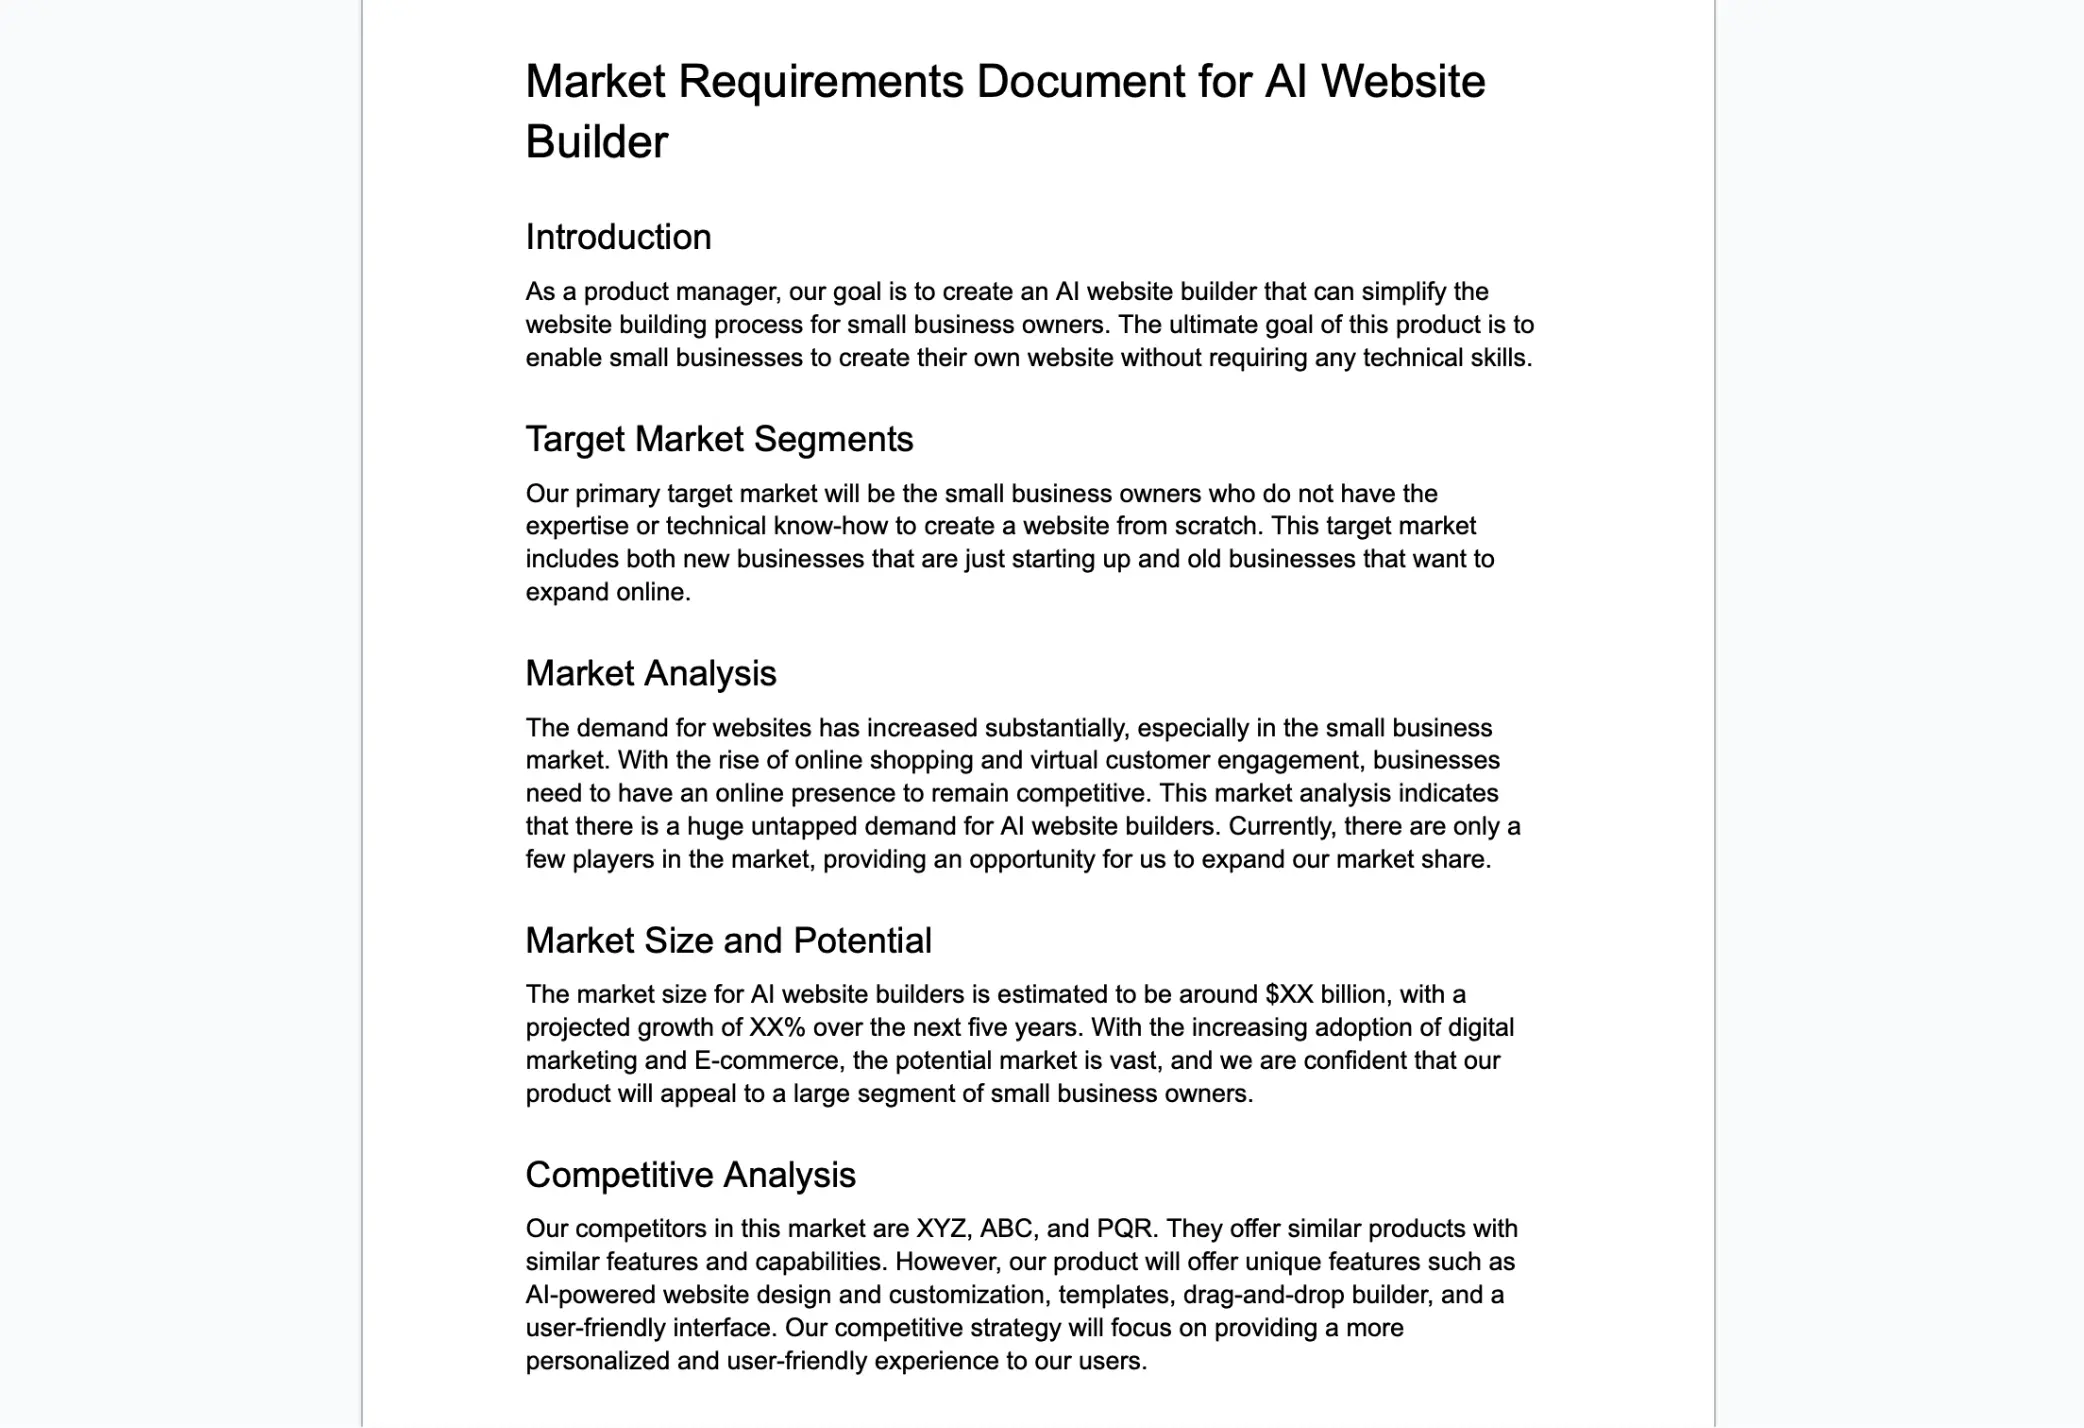 Market Requirements Document (MRD)